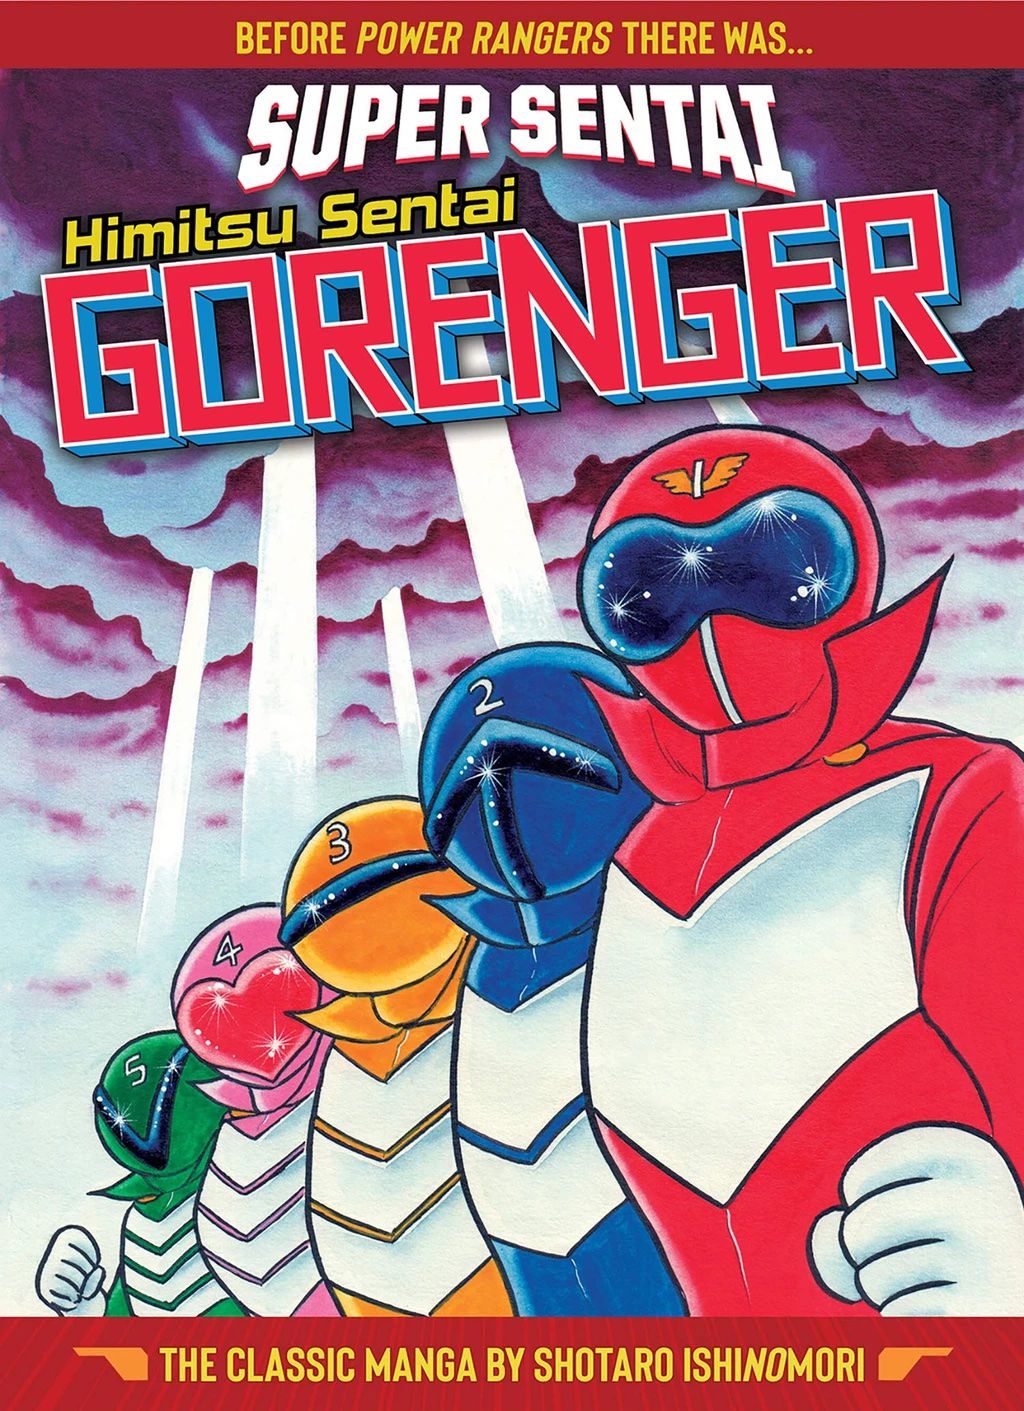 Five super sentai heroes stand abreast under a cloudy sky on the cover of Super Sentai: Himitsu Sentai Gorenger. 